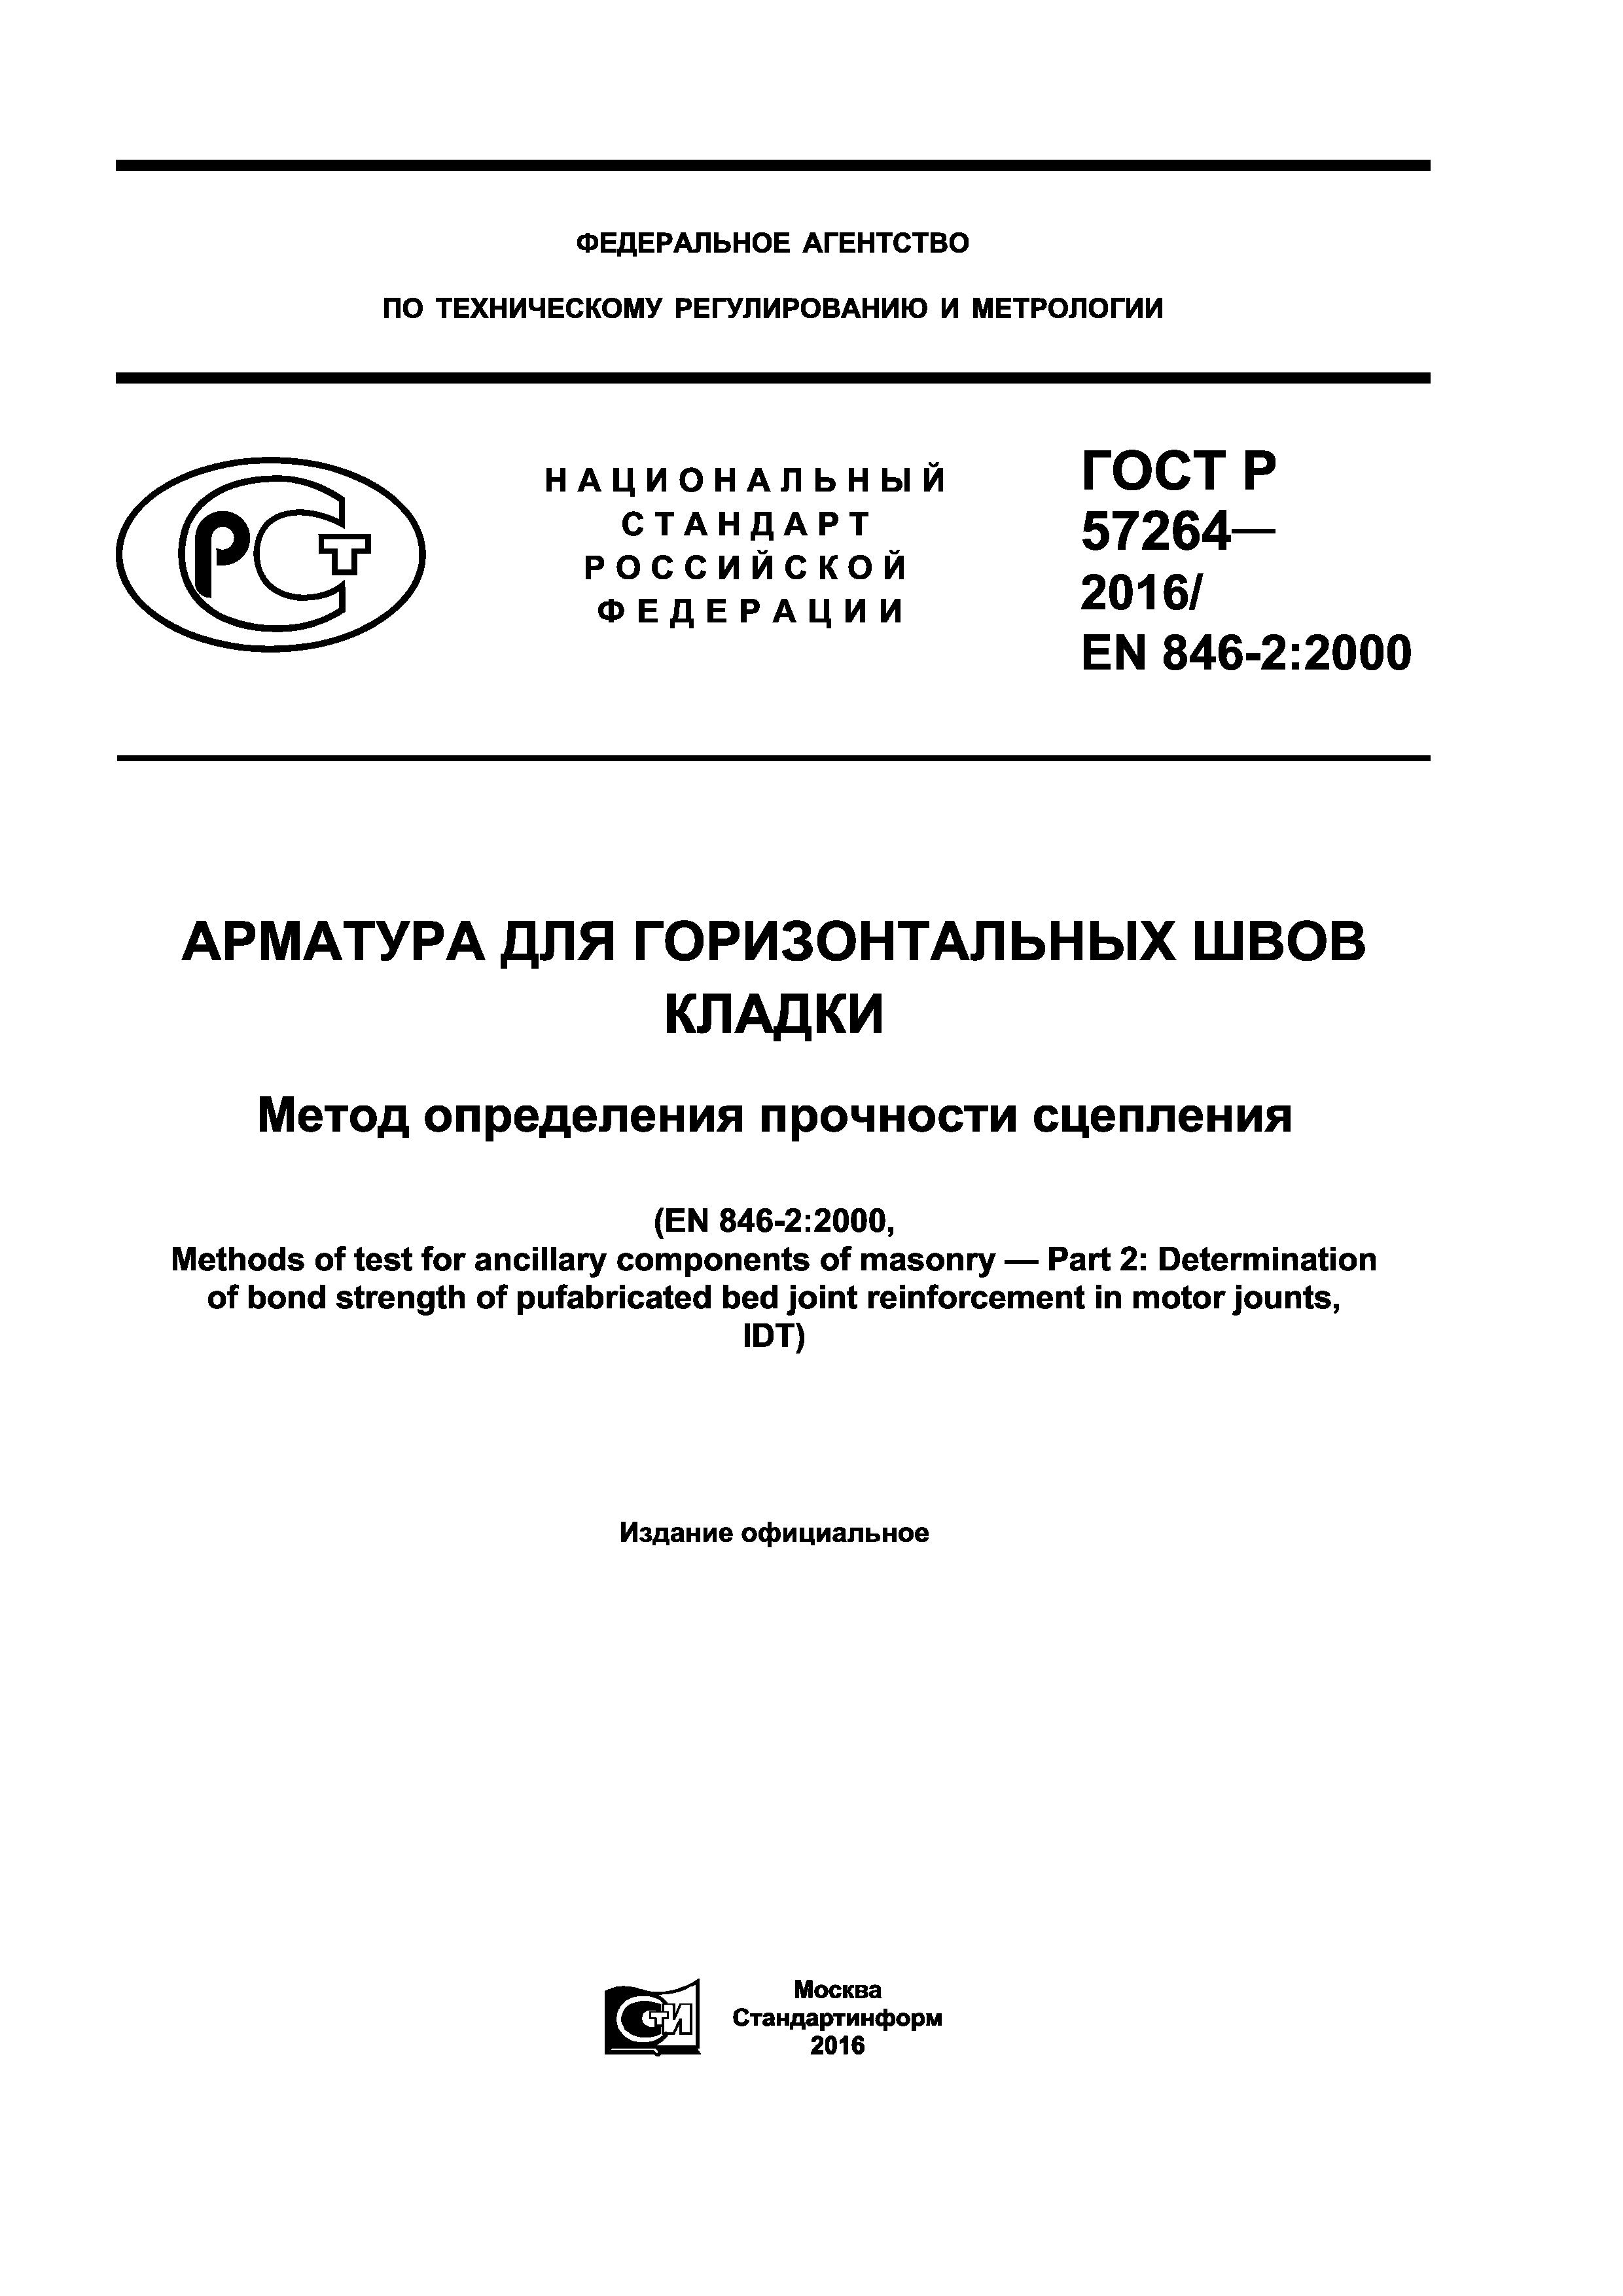 ГОСТ Р 57264-2016